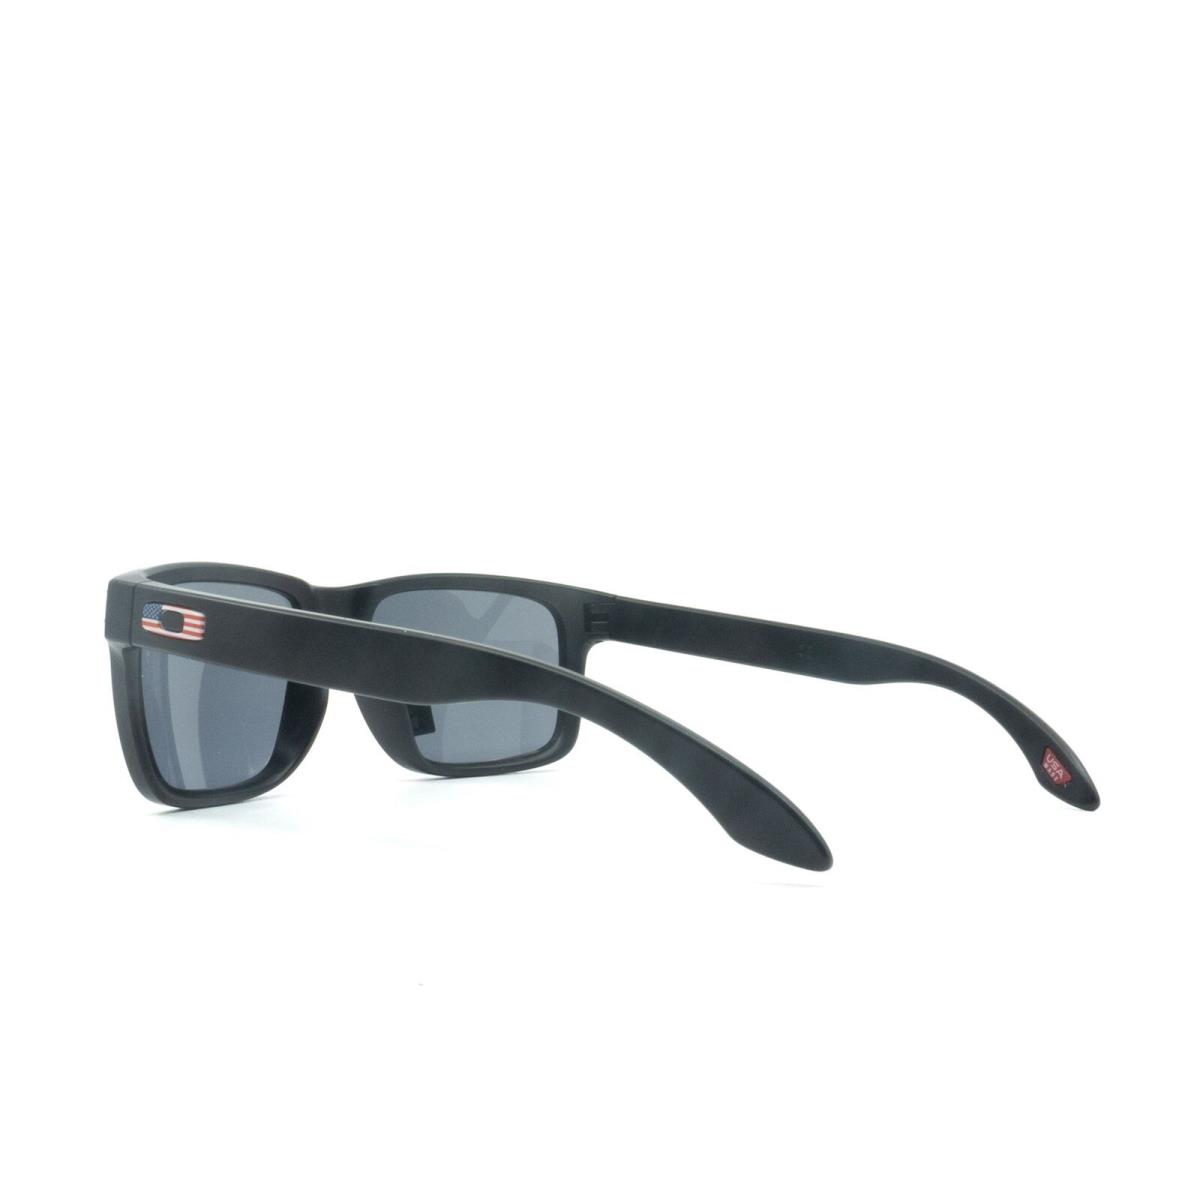 OO9102-E6 Mens Oakley Holbrook Sunglasses - Frame: Black, Lens: Gray